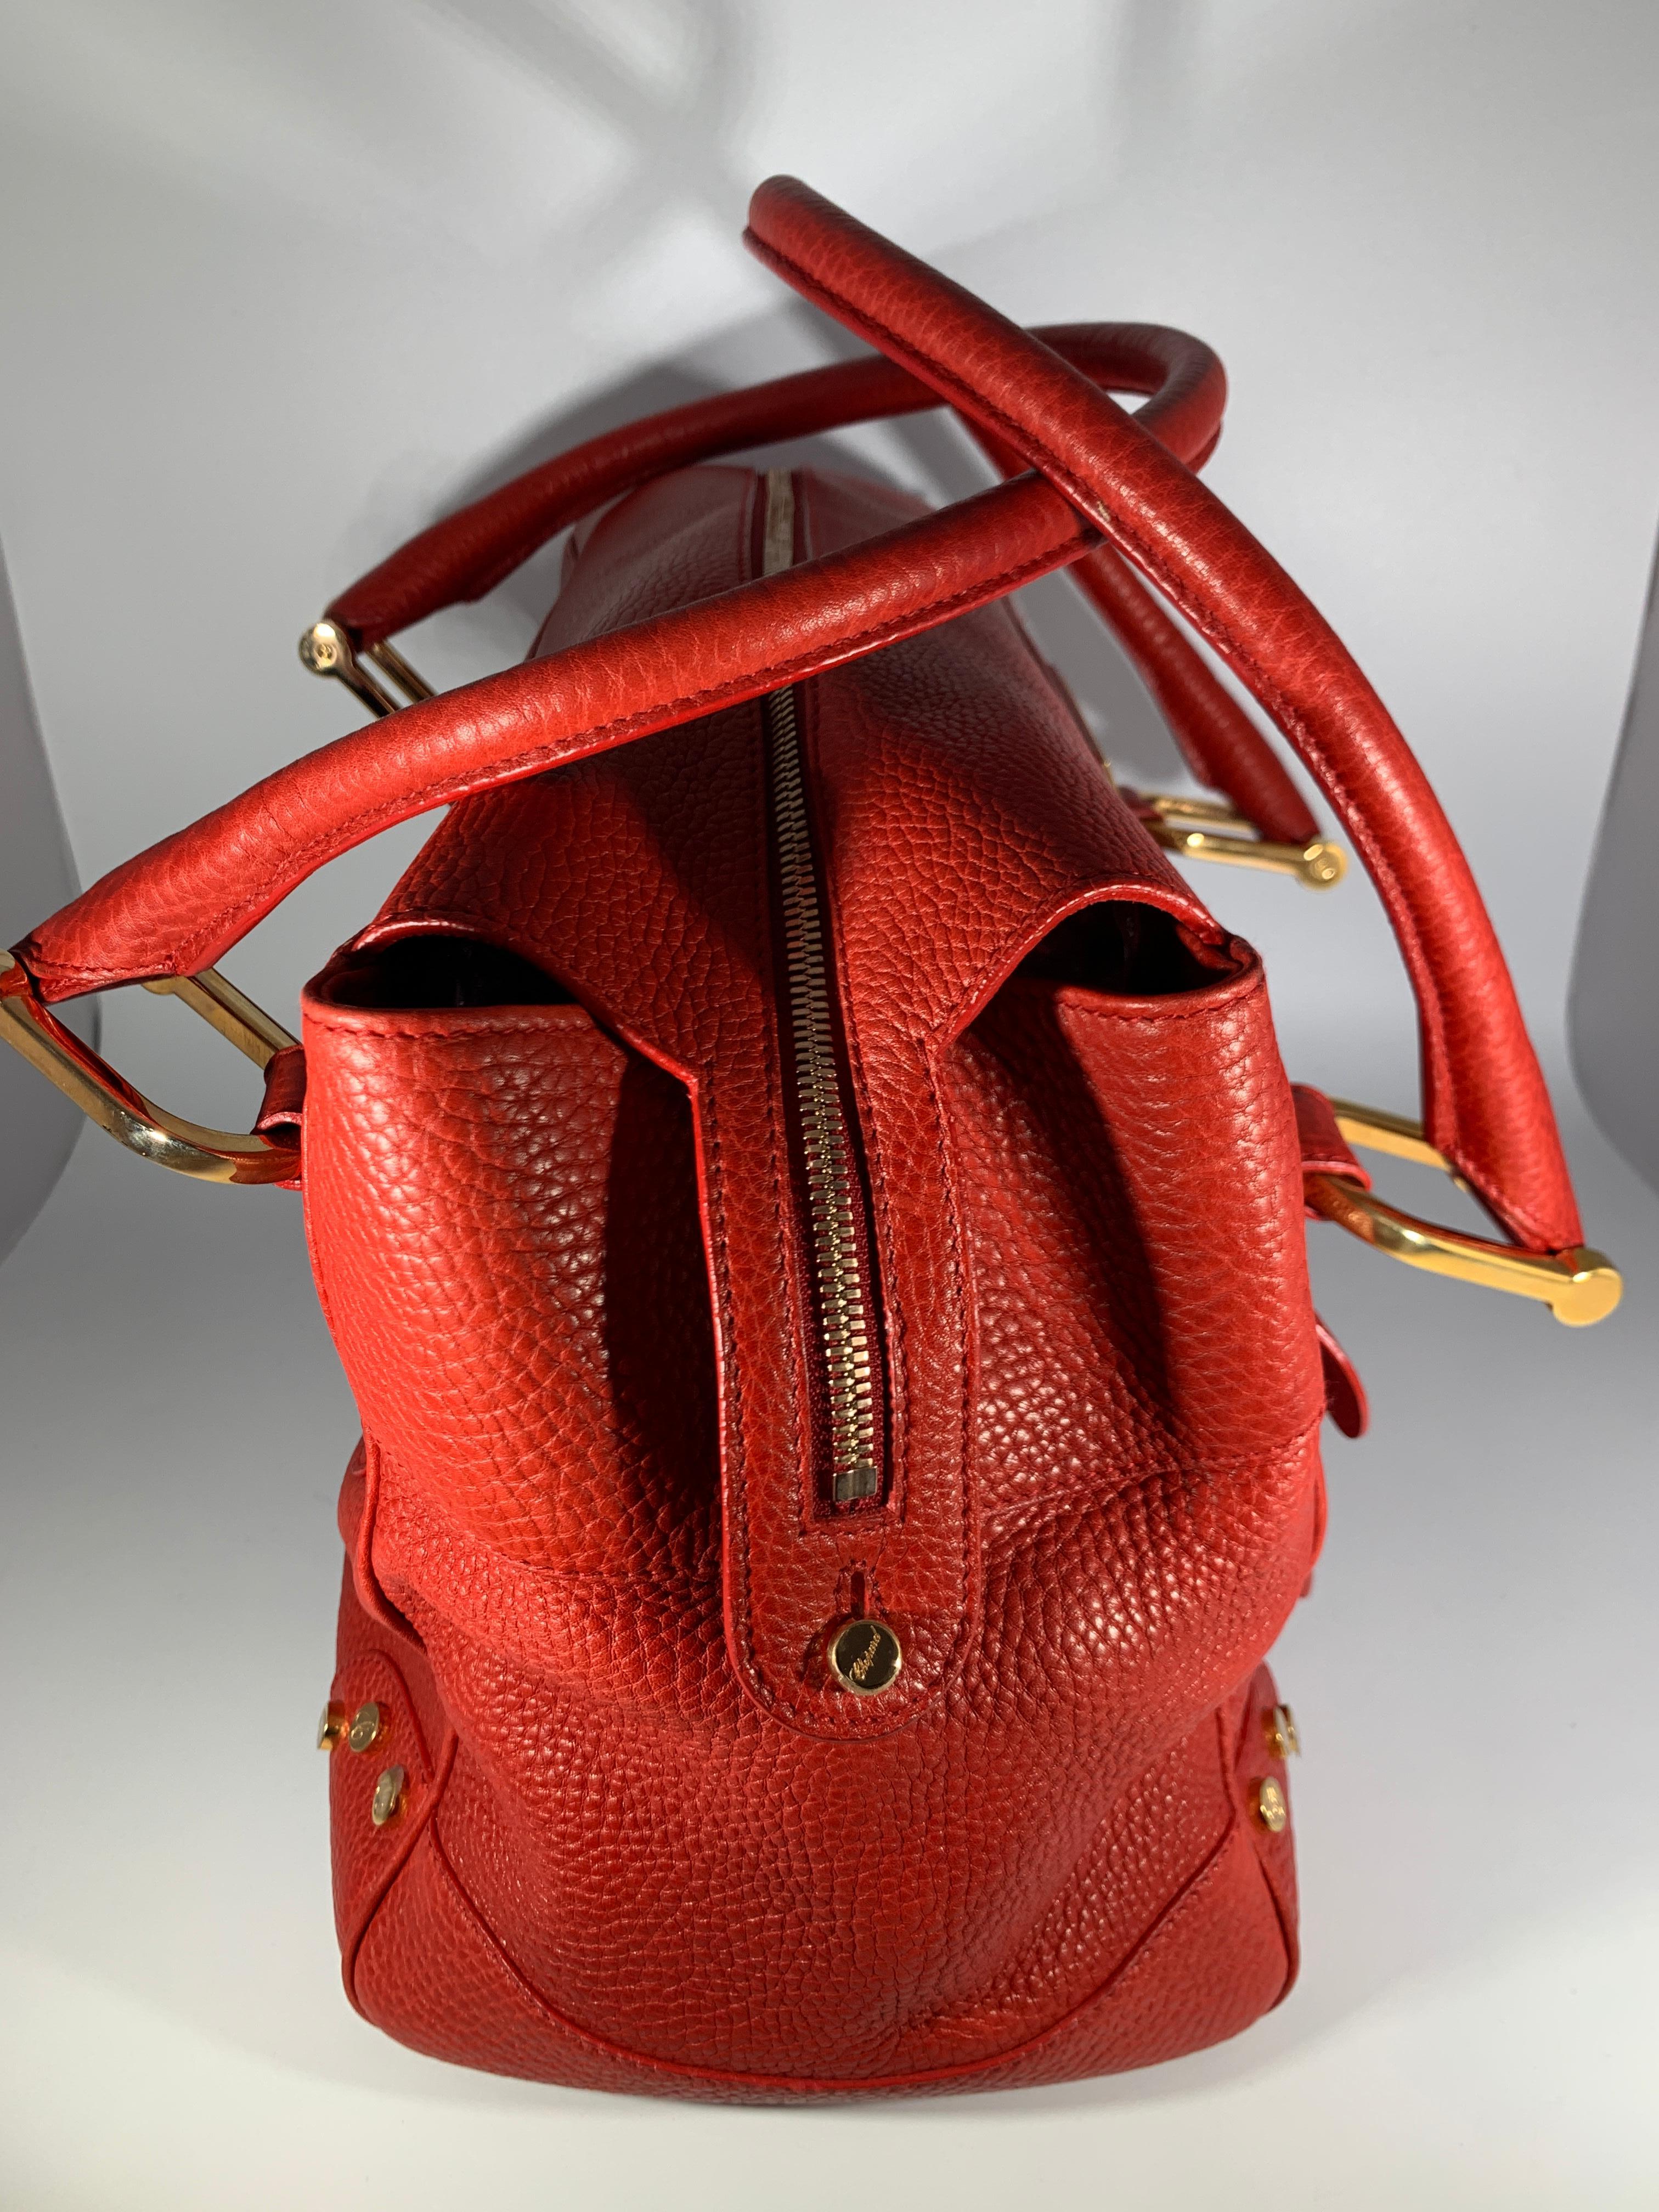 Chopard Red Leather Large Handbag,  happy diamond series heart closure.  1